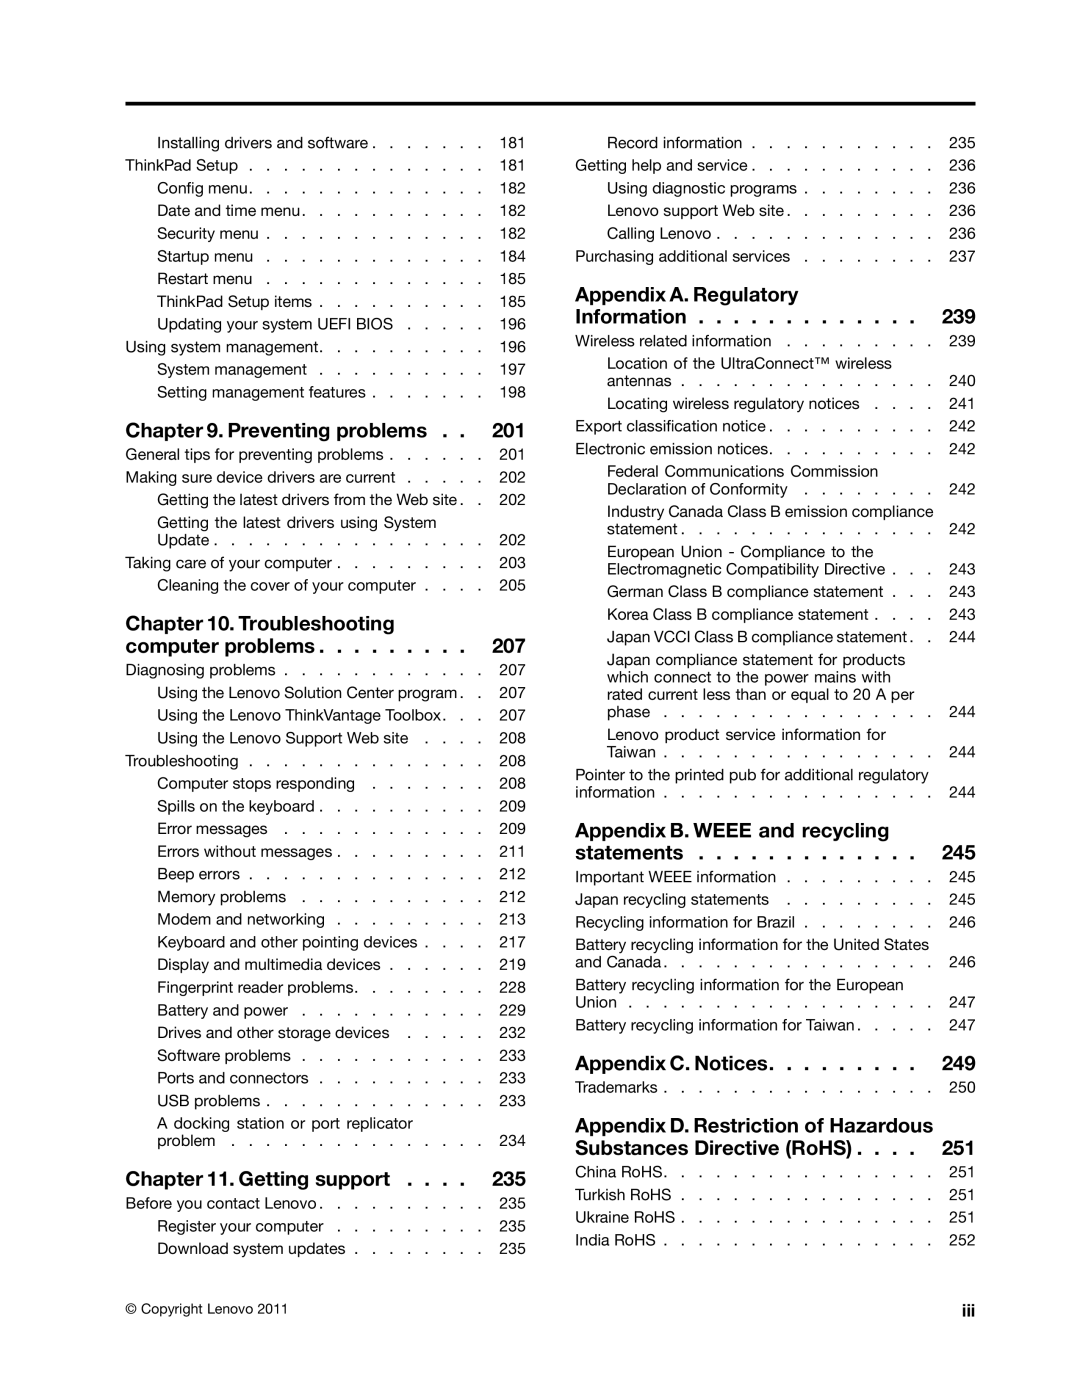 Lenovo 429040 manual Appendix C. Notices 249 